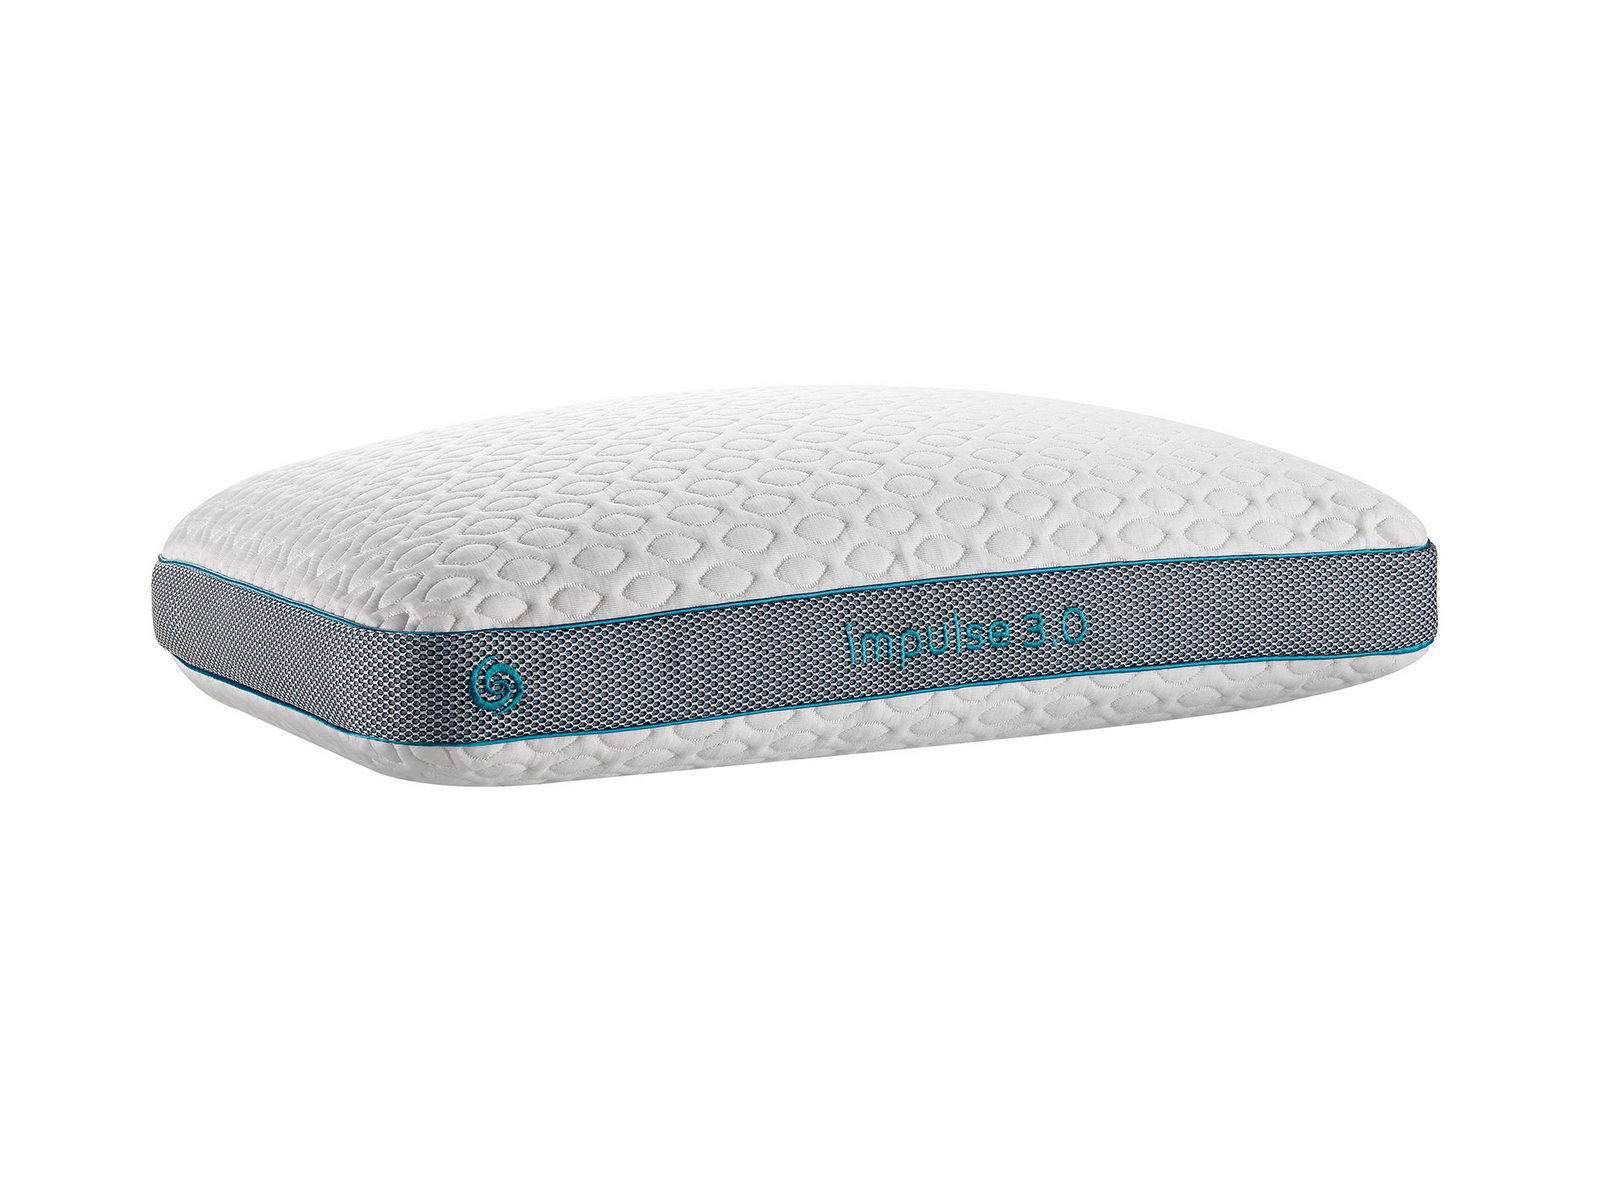 Bedgear Impulse 3.0 Pillow